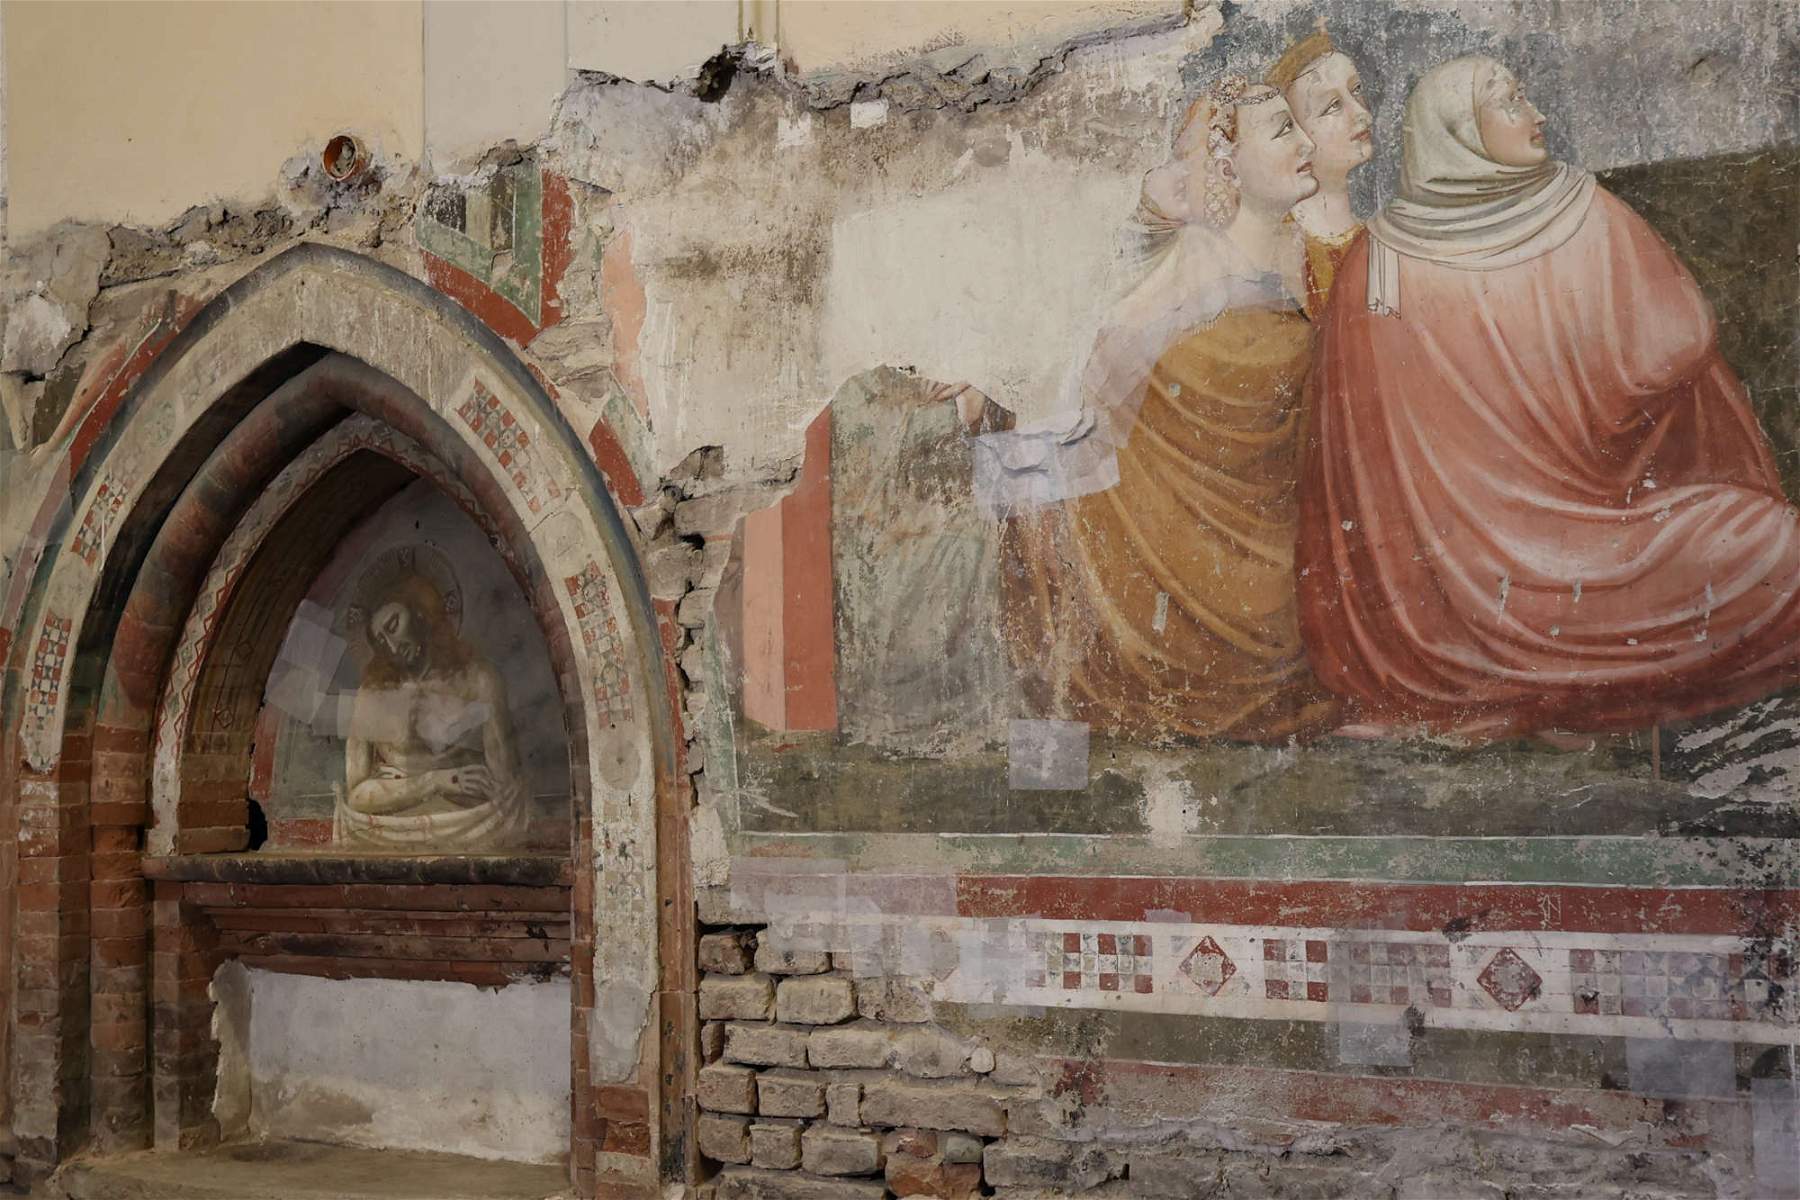 Rimini, important 14th-century frescoes unearthed in Verucchio